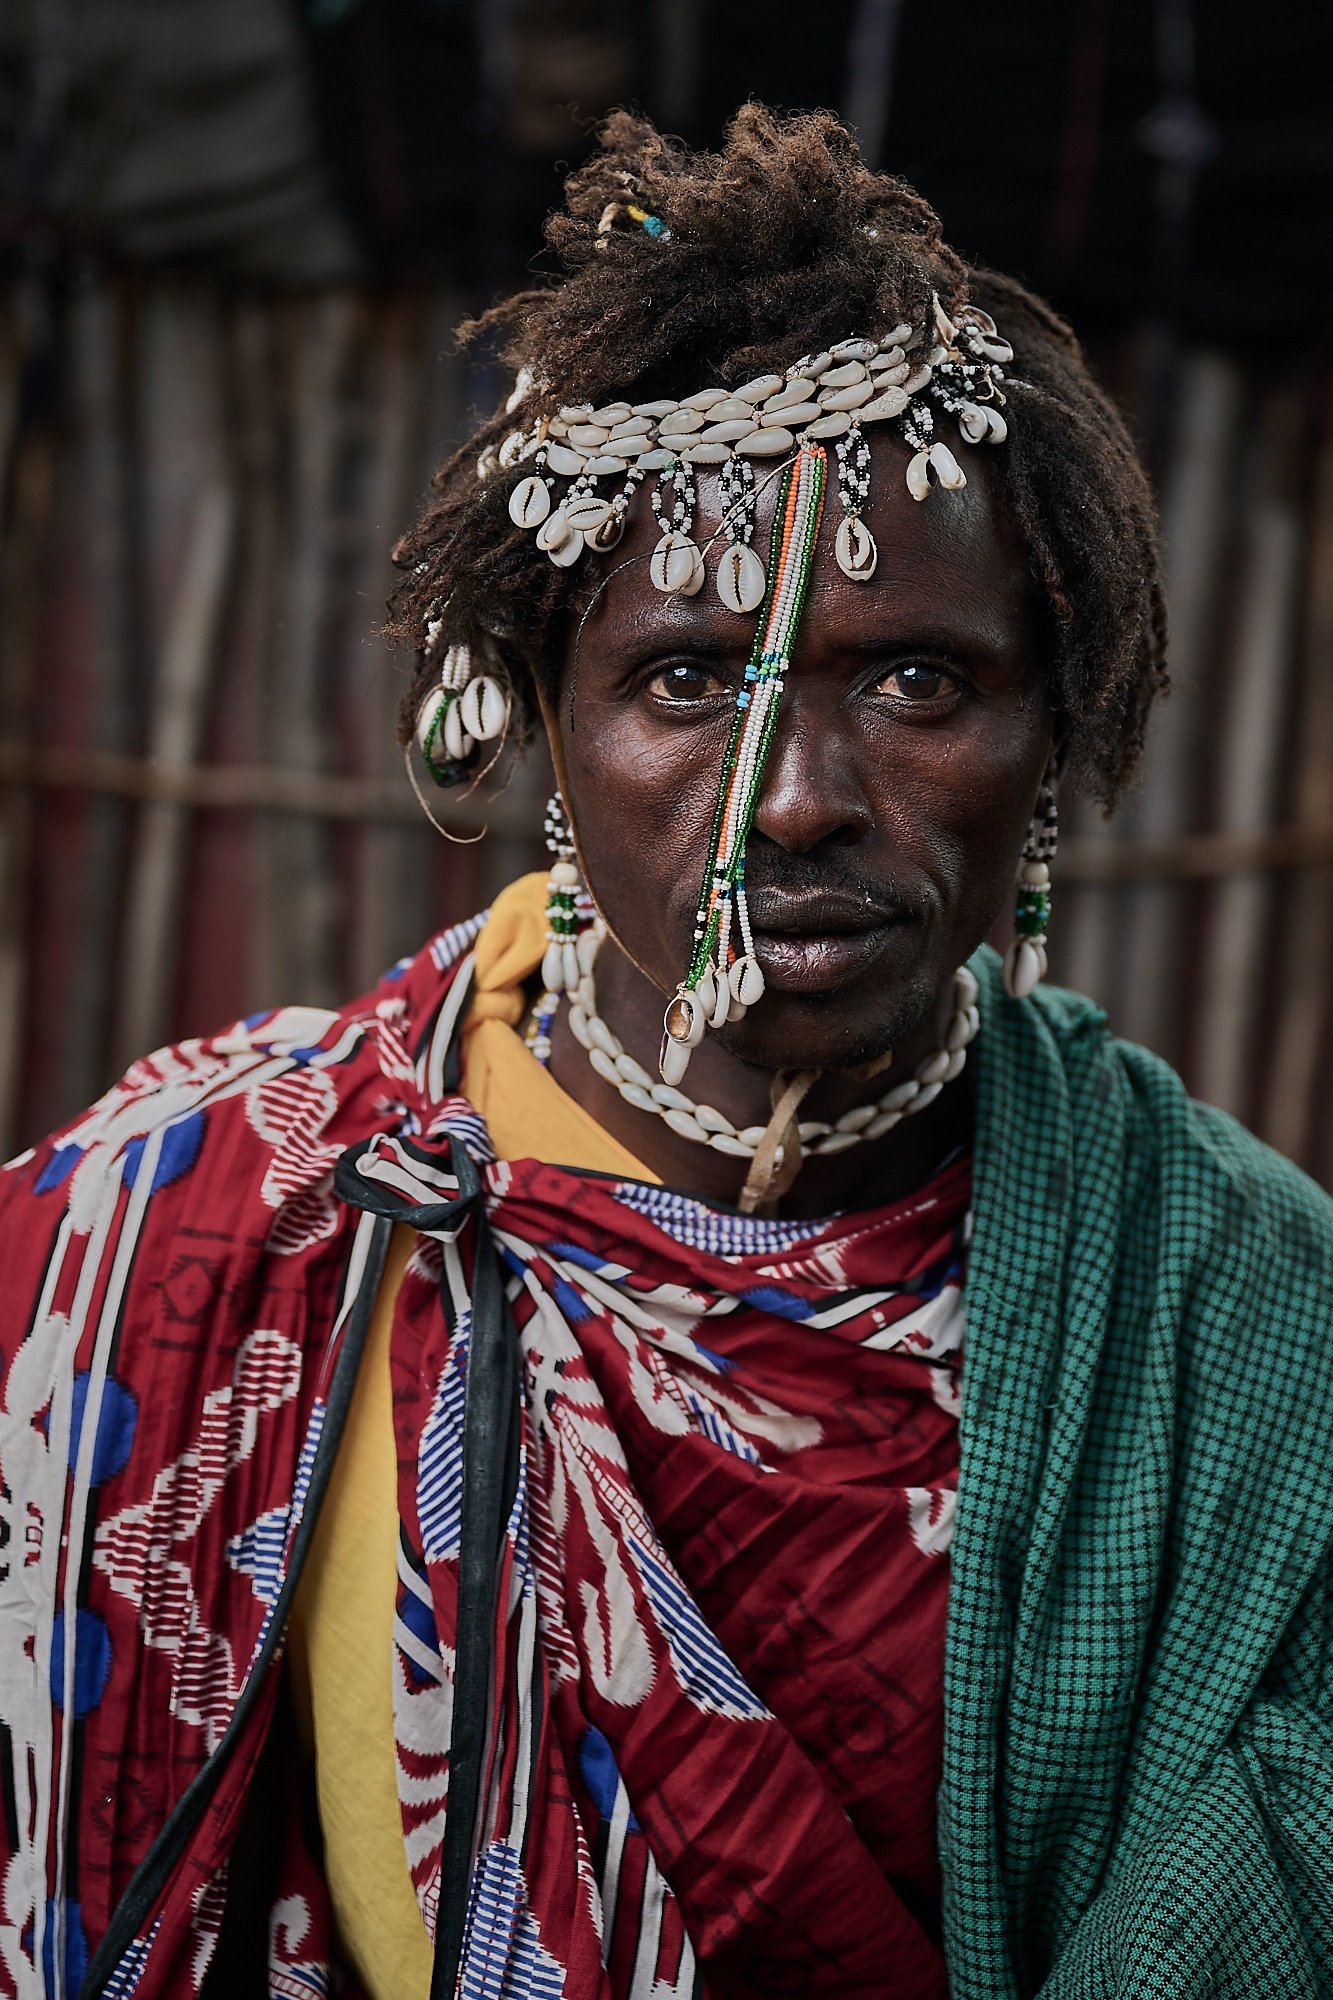 Samburu travelling witch-doctor and fortune-teller